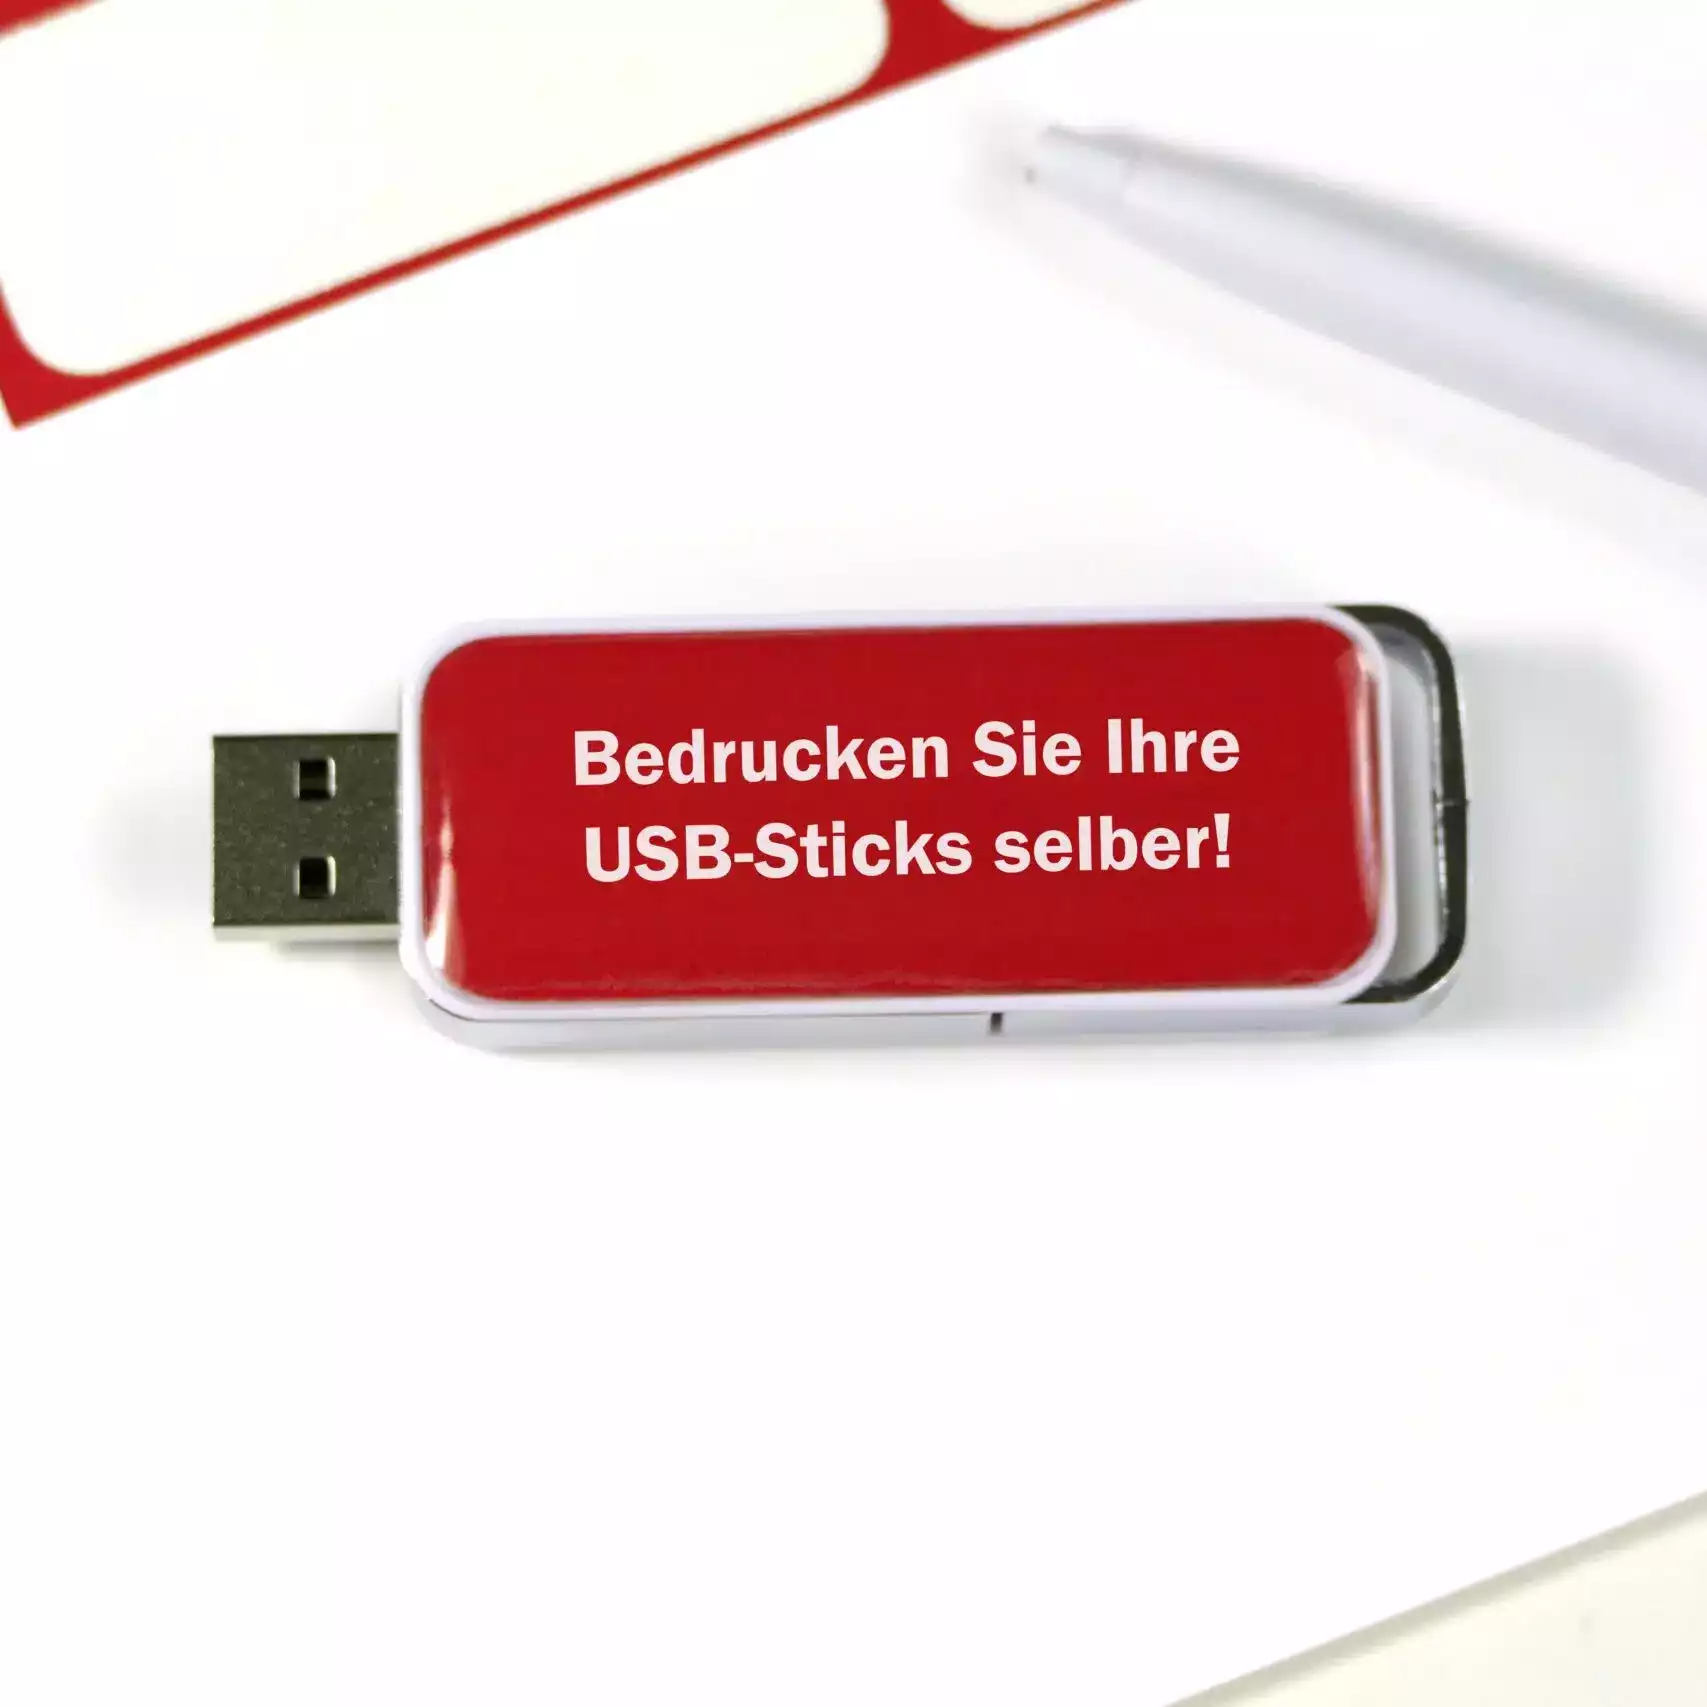 USB Sticks selber bedrucken